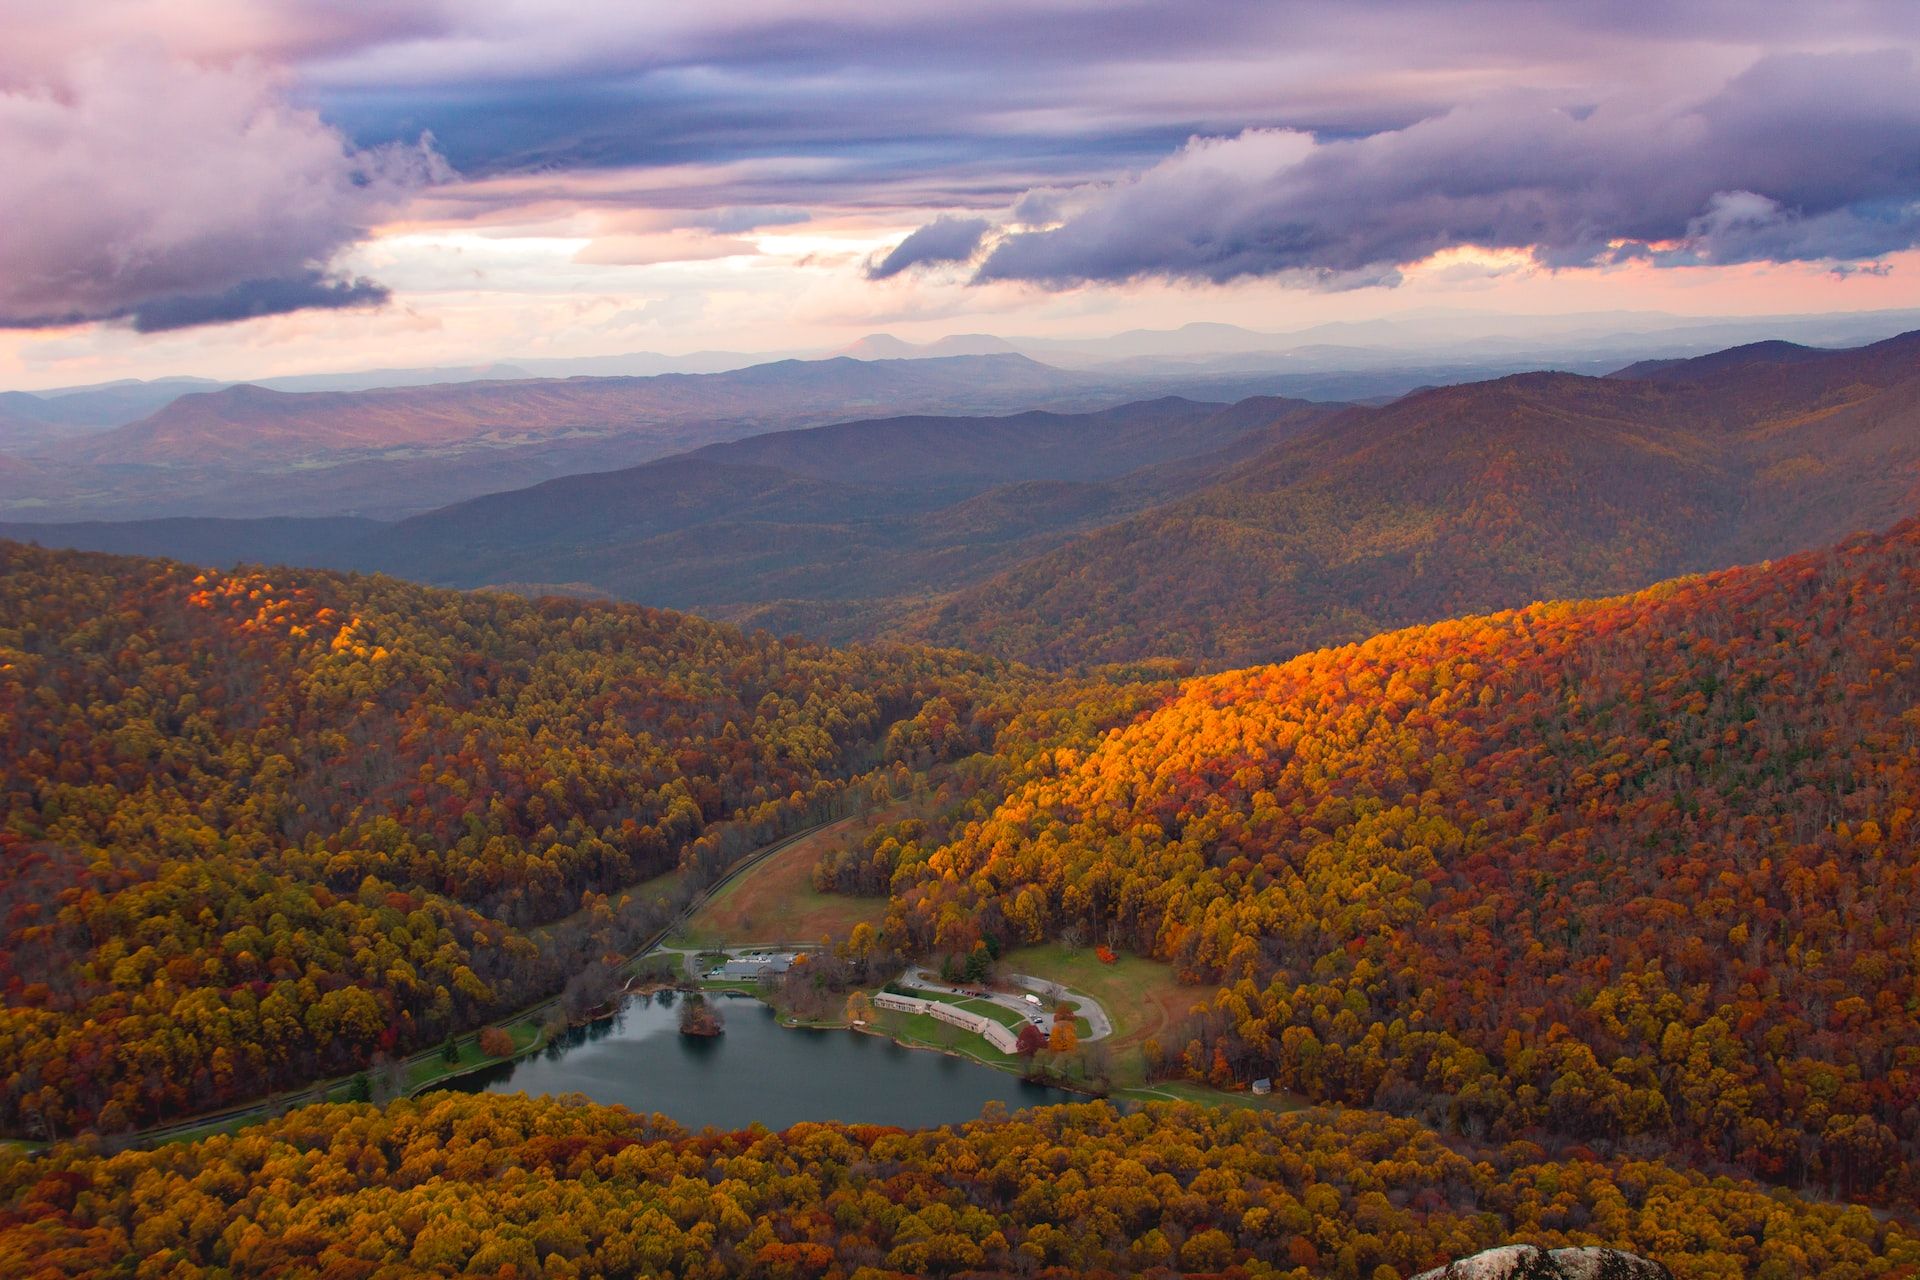 Vibrant fall foliage in the Blue Ridge Mountains of Virginia